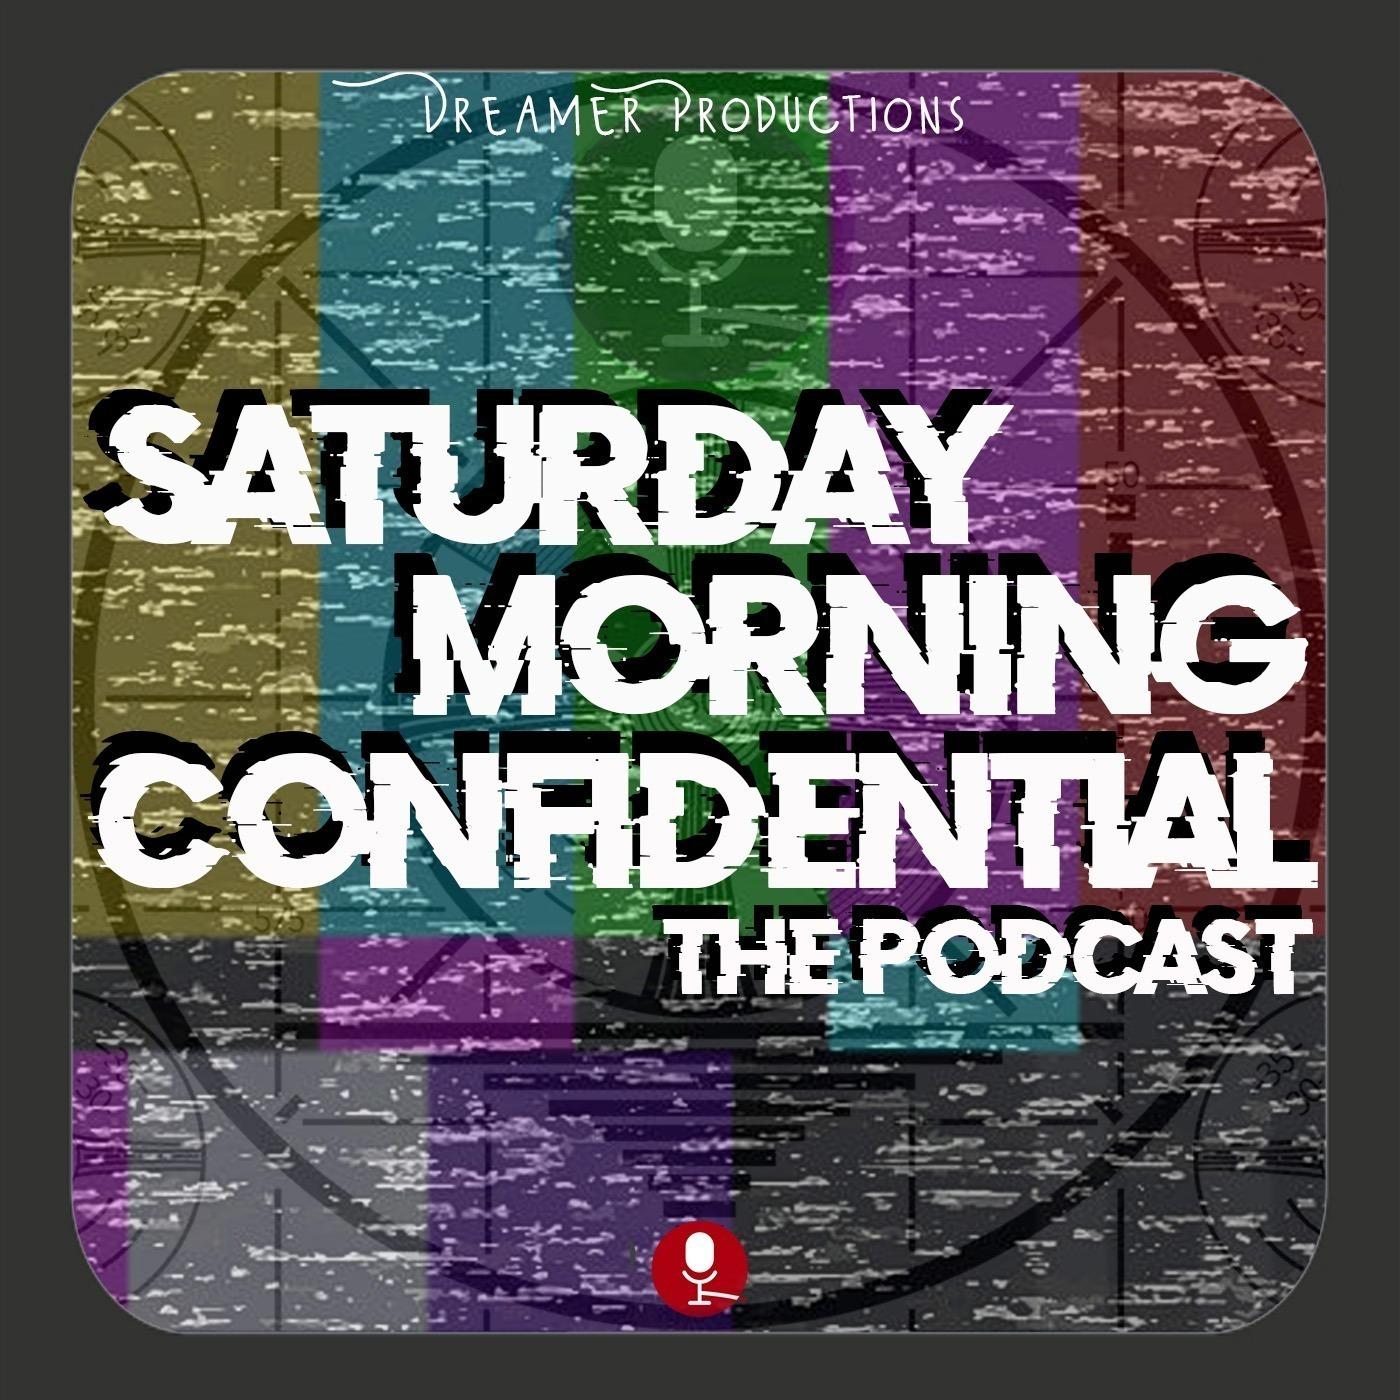 Saturday Morning Confidential